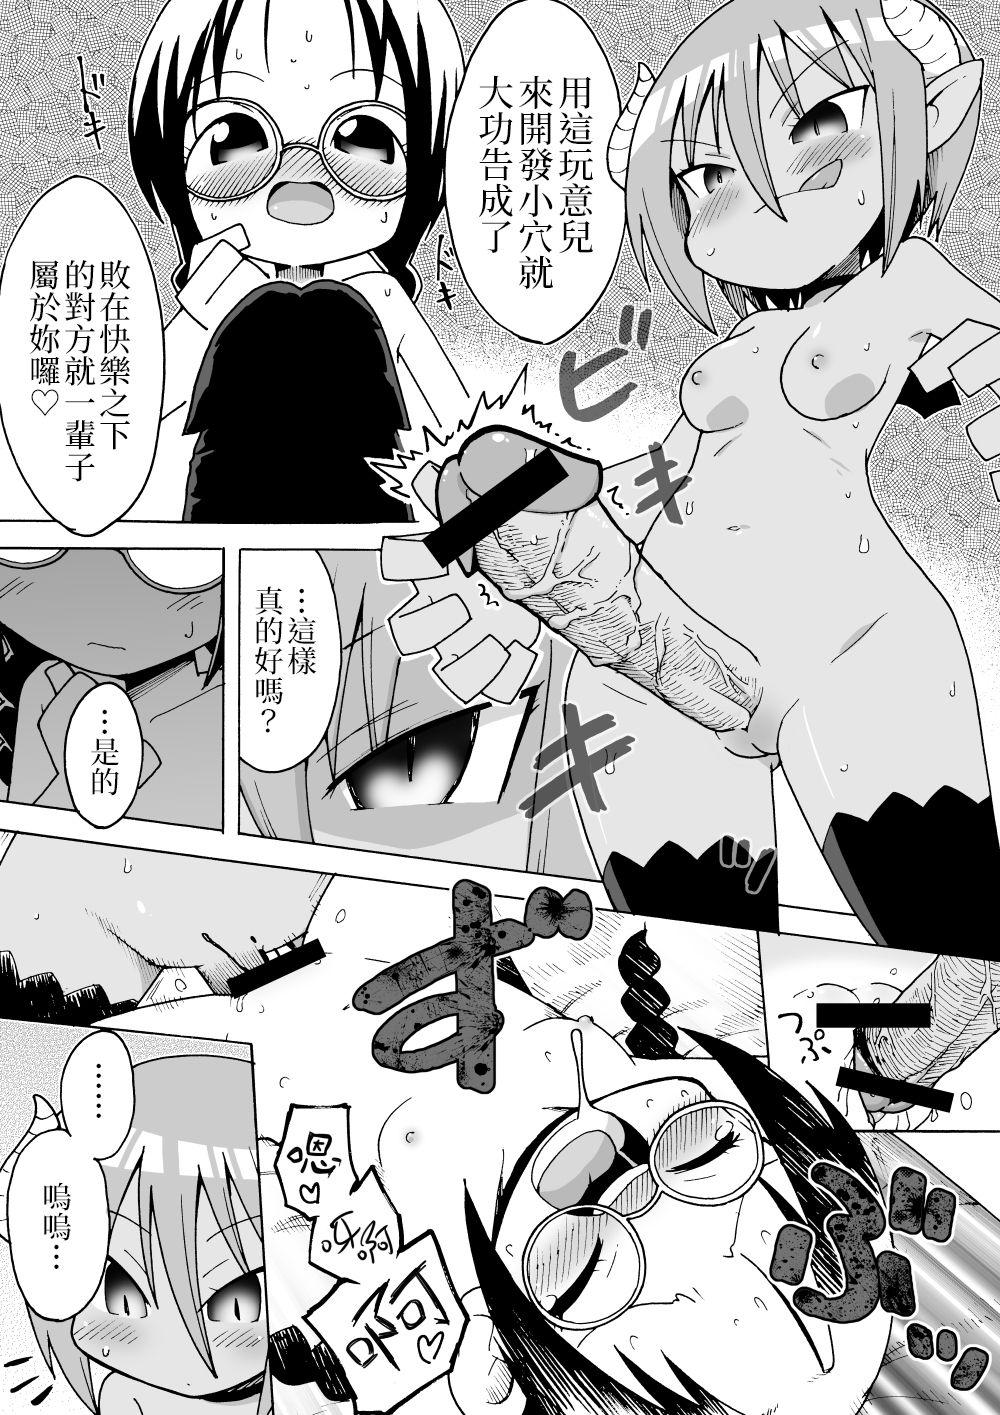 Maid Succubus Manga | 魅魔漫畫 - Original 18yearsold - Page 3